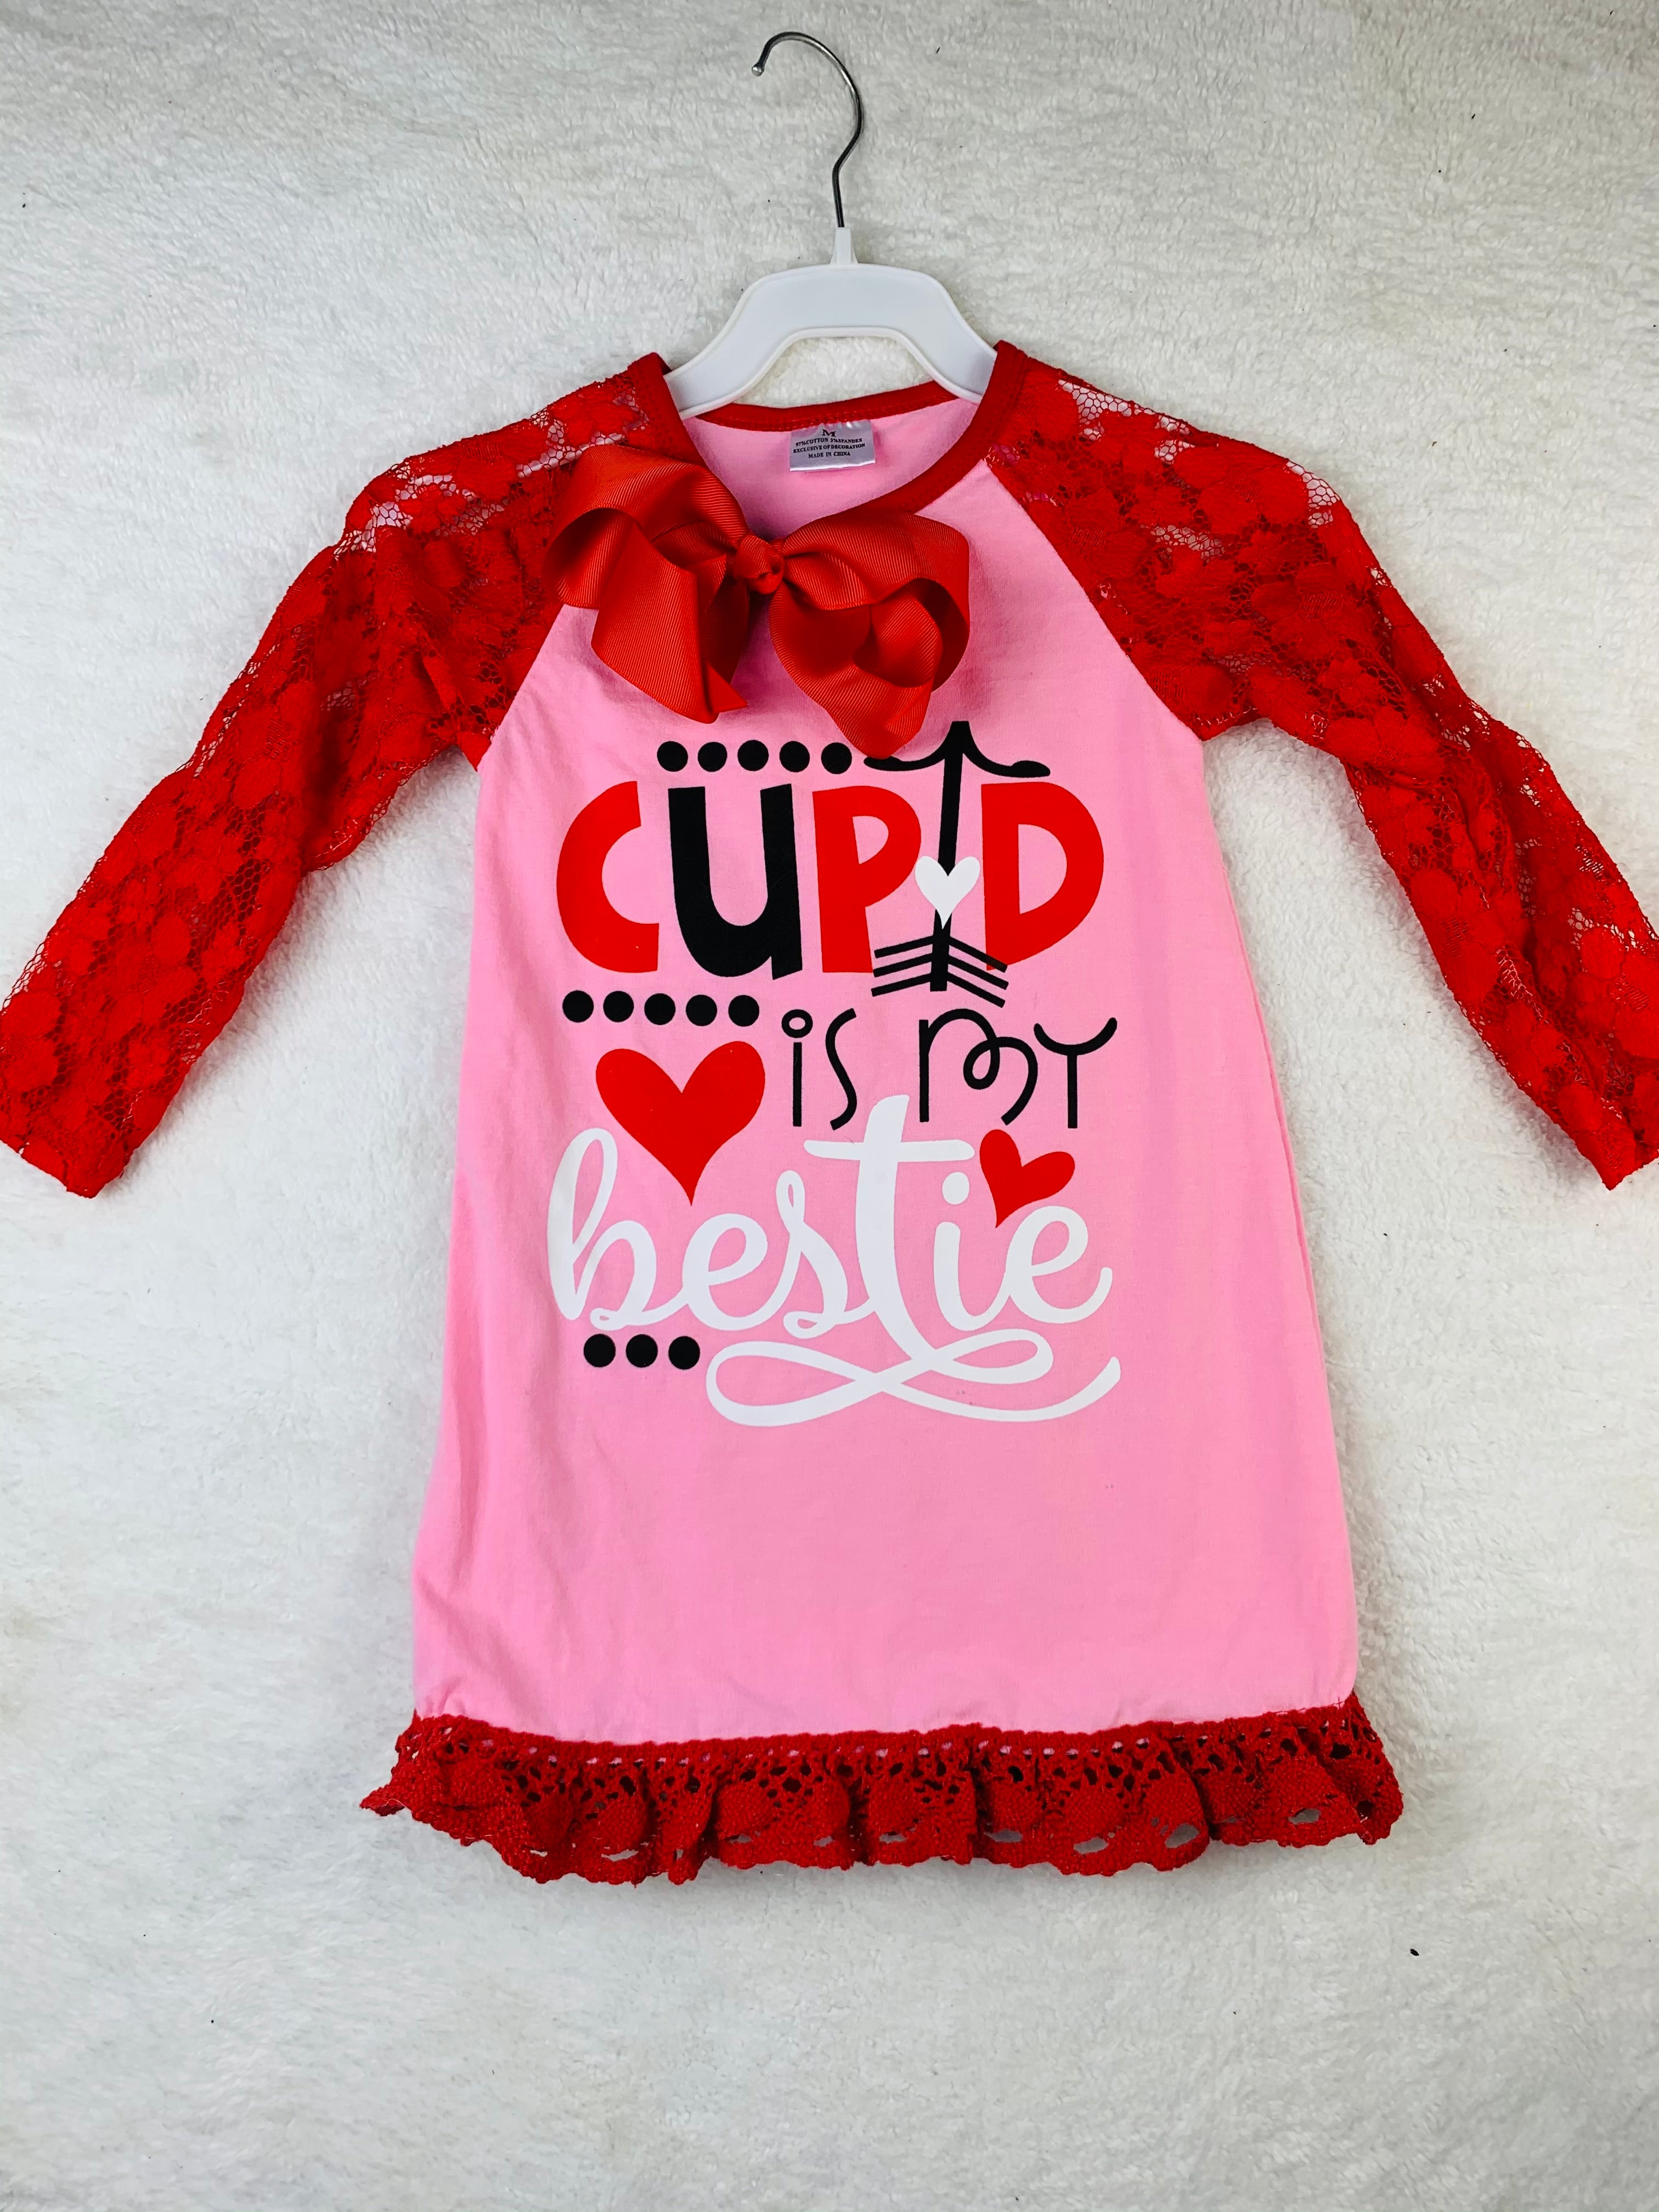 Cupid is my bestie 3T